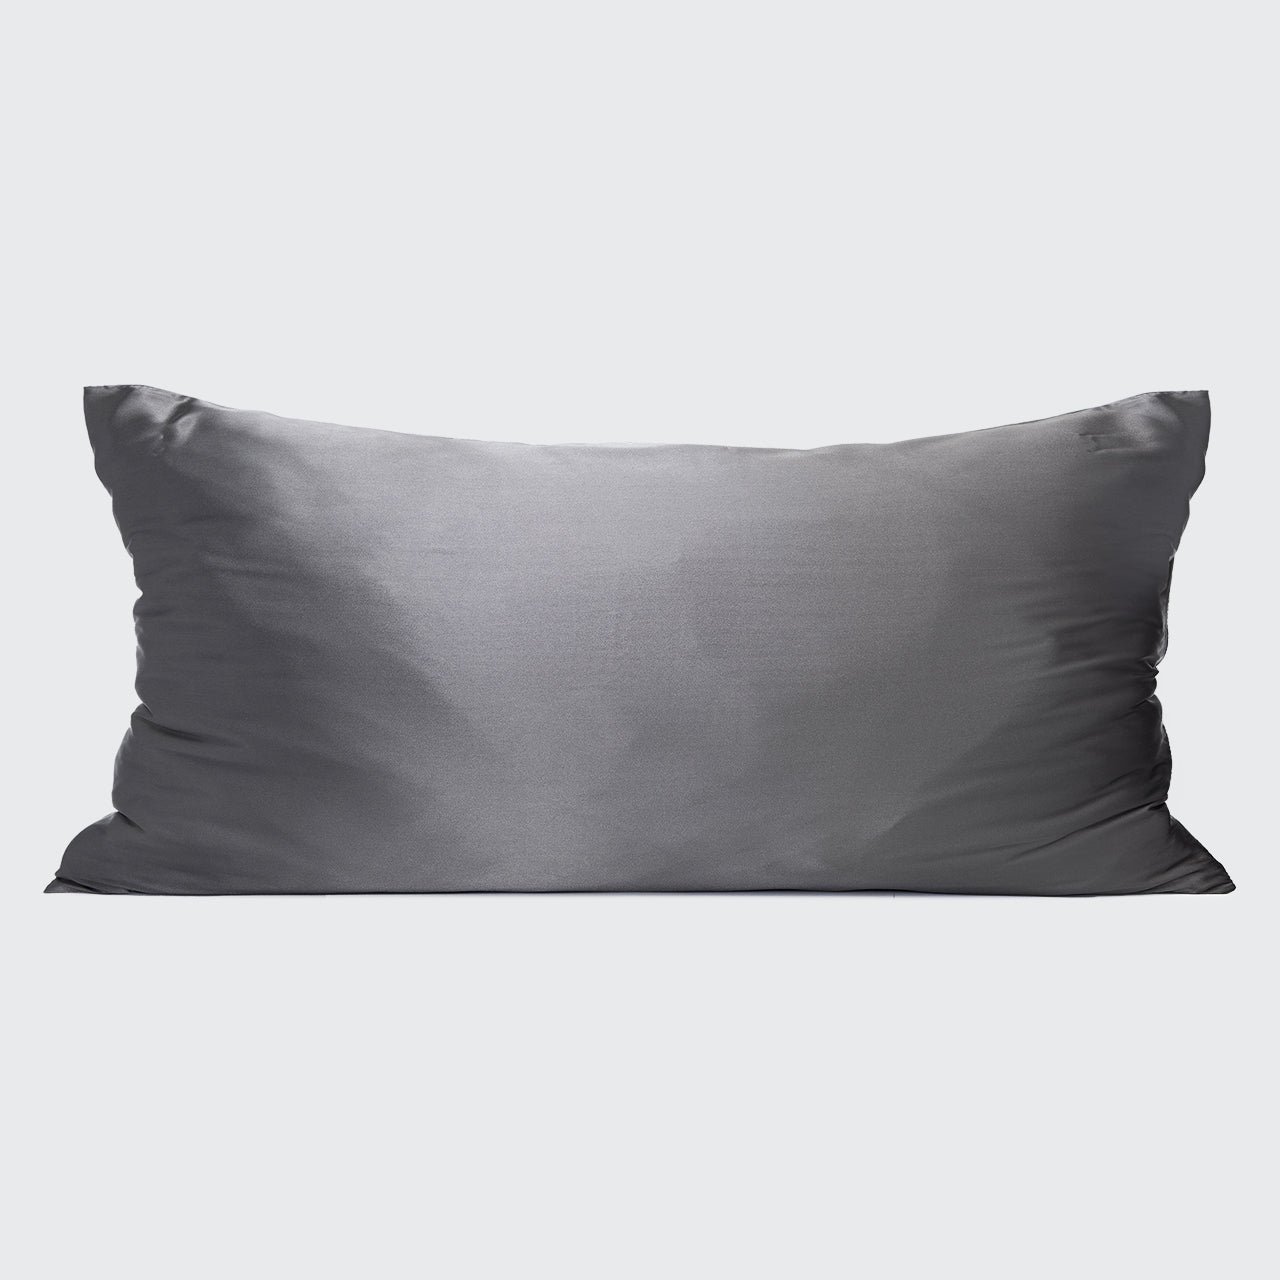 King Pillowcase - Charcoal